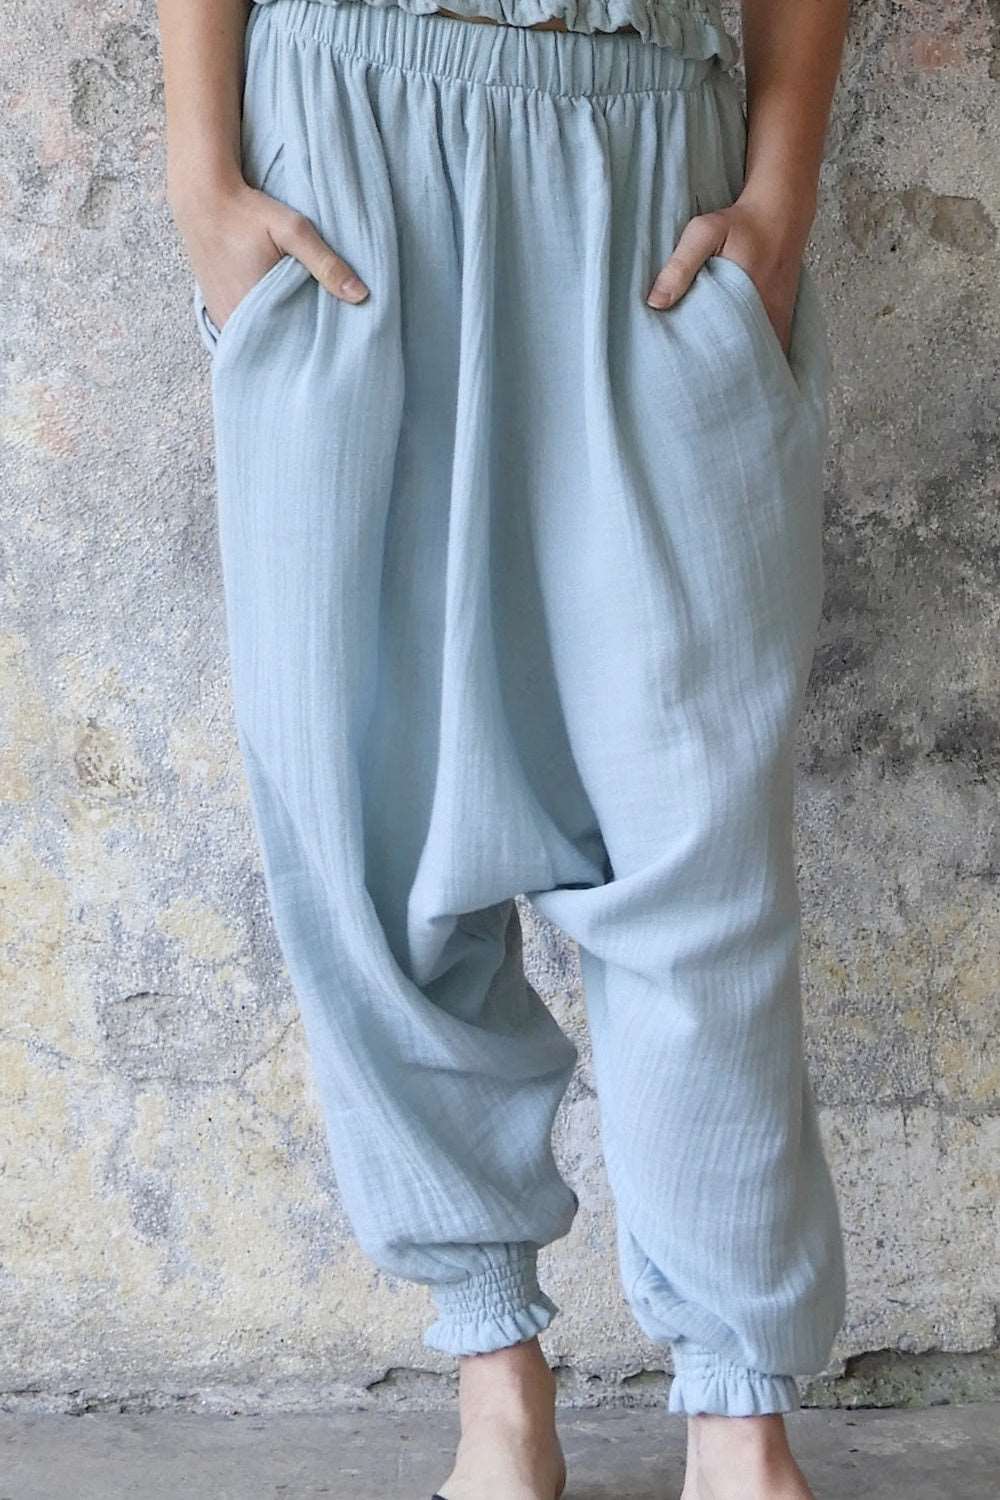 Odana's | GAIA Women's Gauze Cotton Harem Pants (Light Blue, Mint, Orange) Light Blue | Harem Pants | Sustainable Fashion